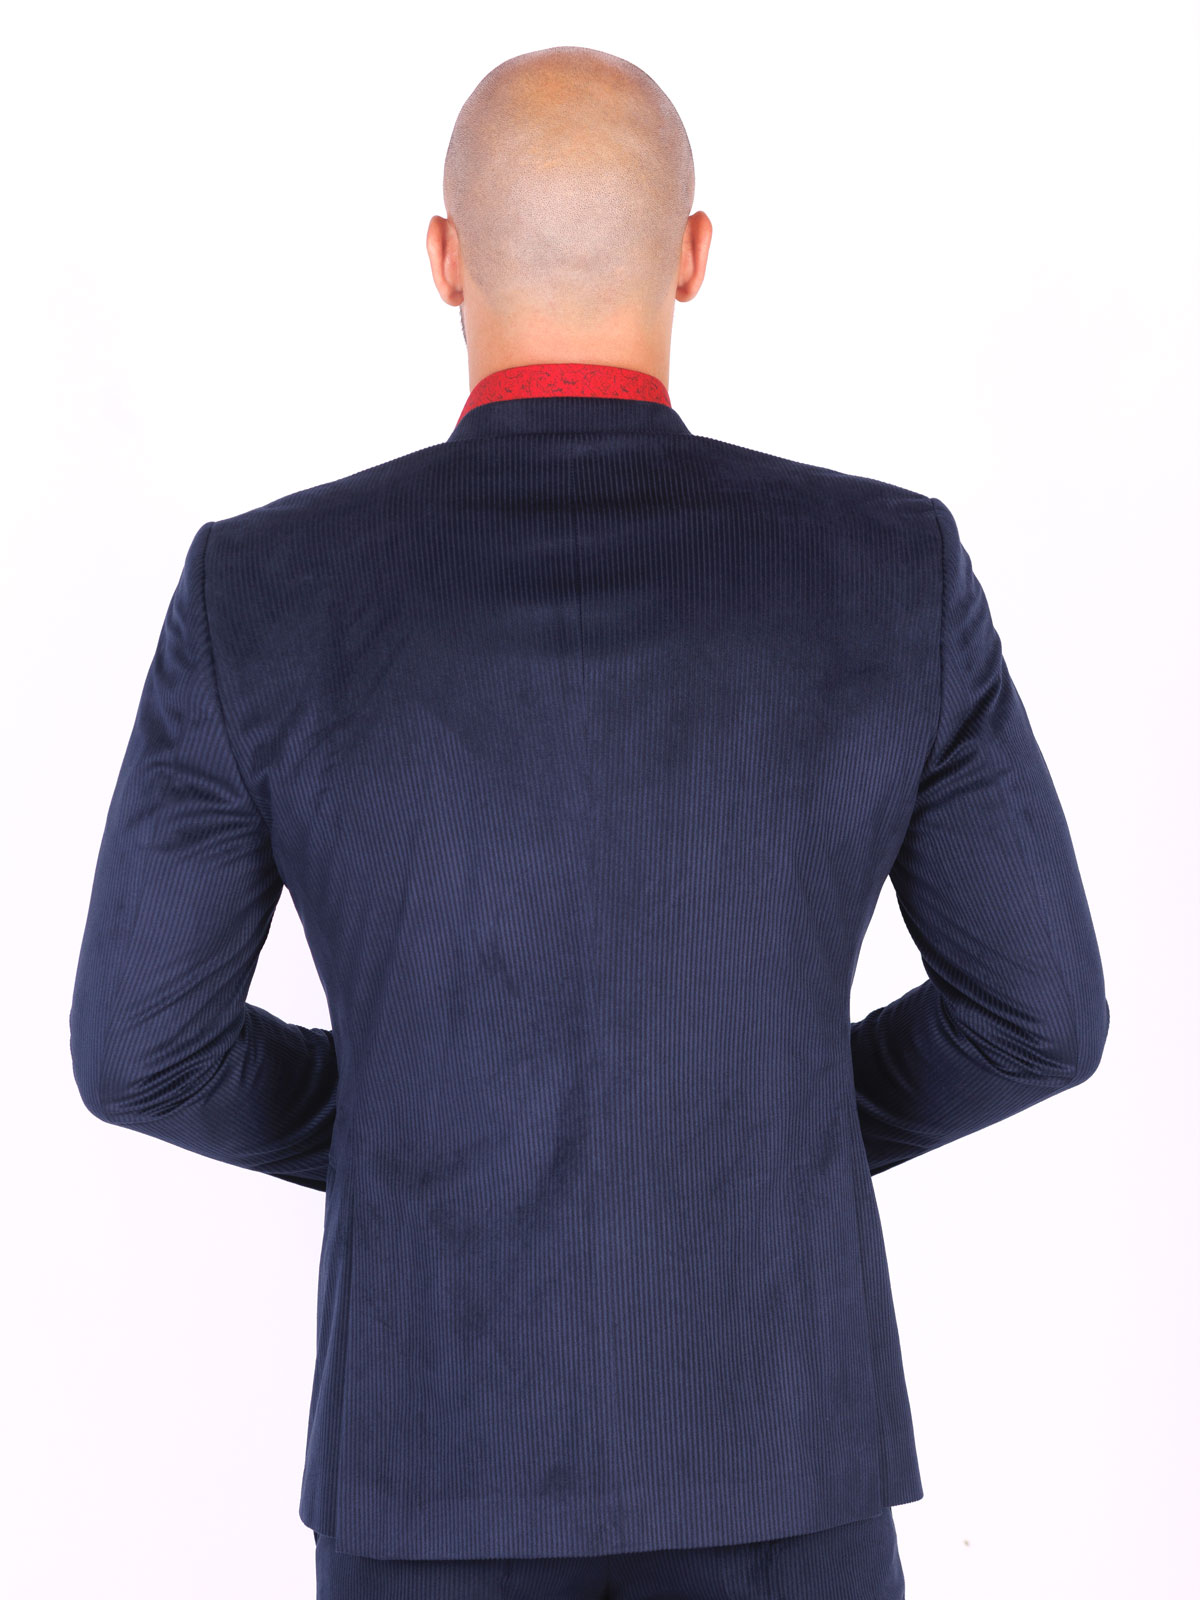 Navy blue striped jacket - 61101 € 83.80 img2